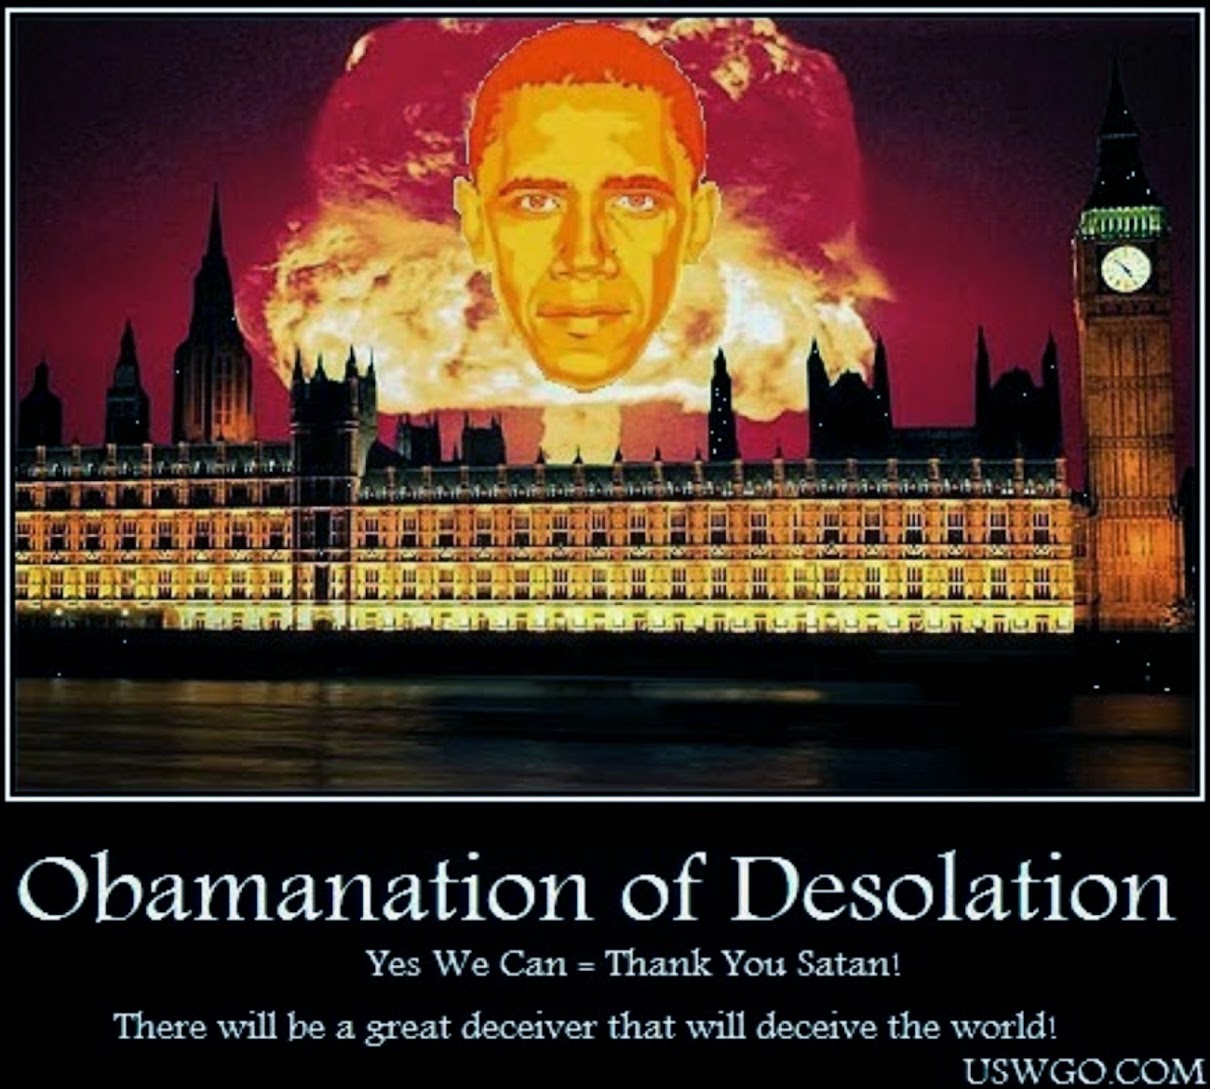 THE OBAMANATION OF DESOLATION